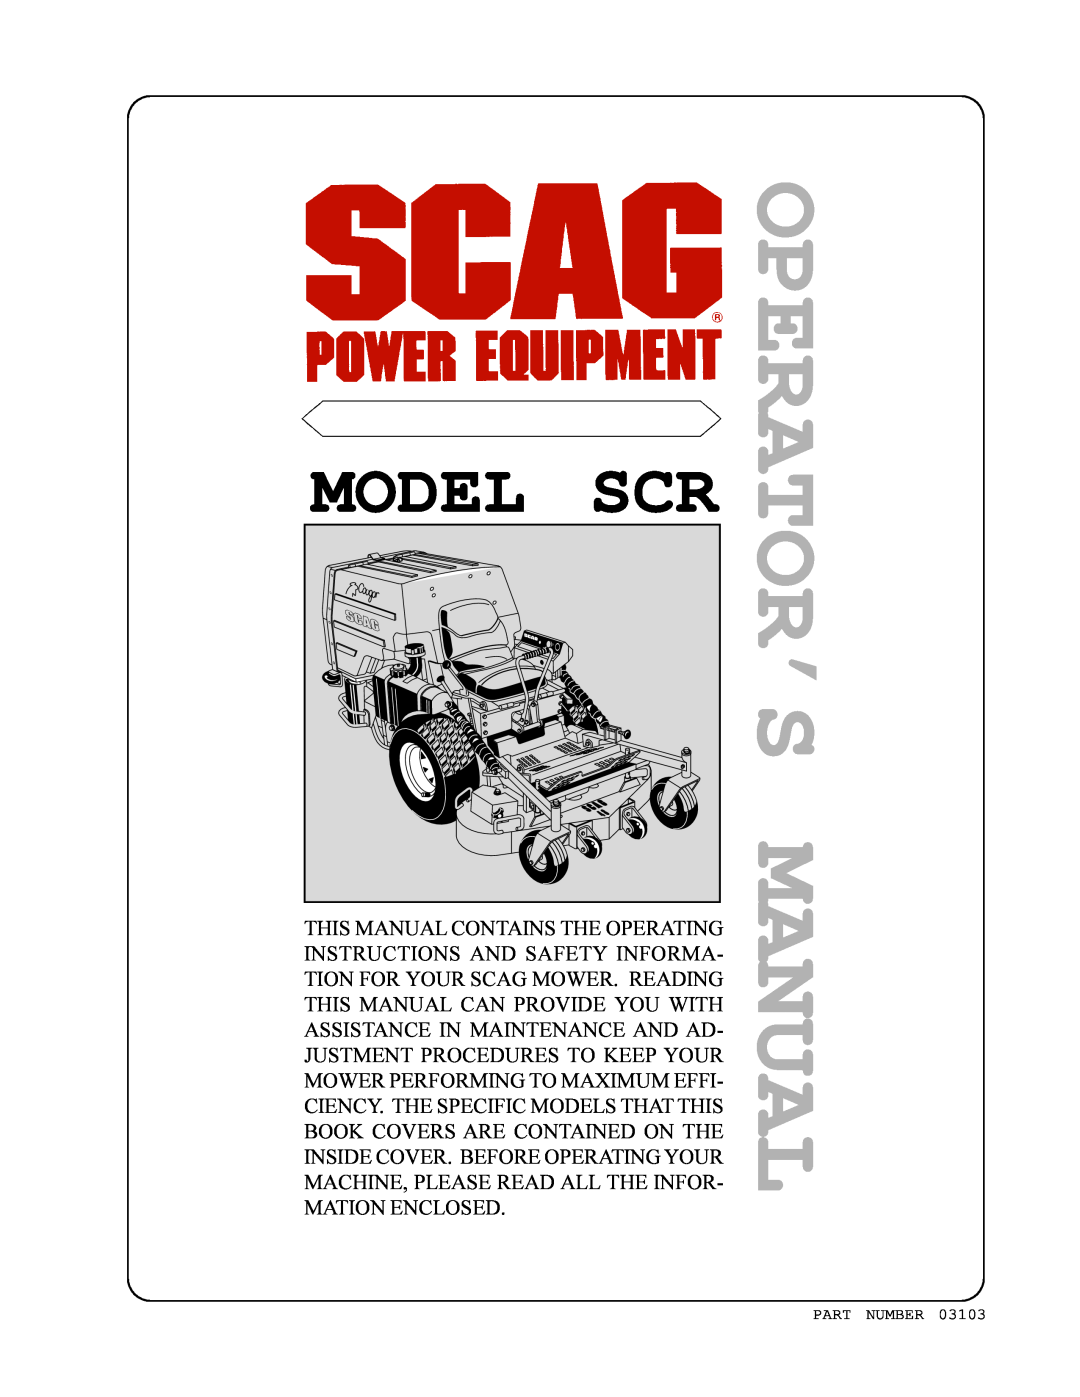 MB QUART SCR manual Operator’S Manual, Model 